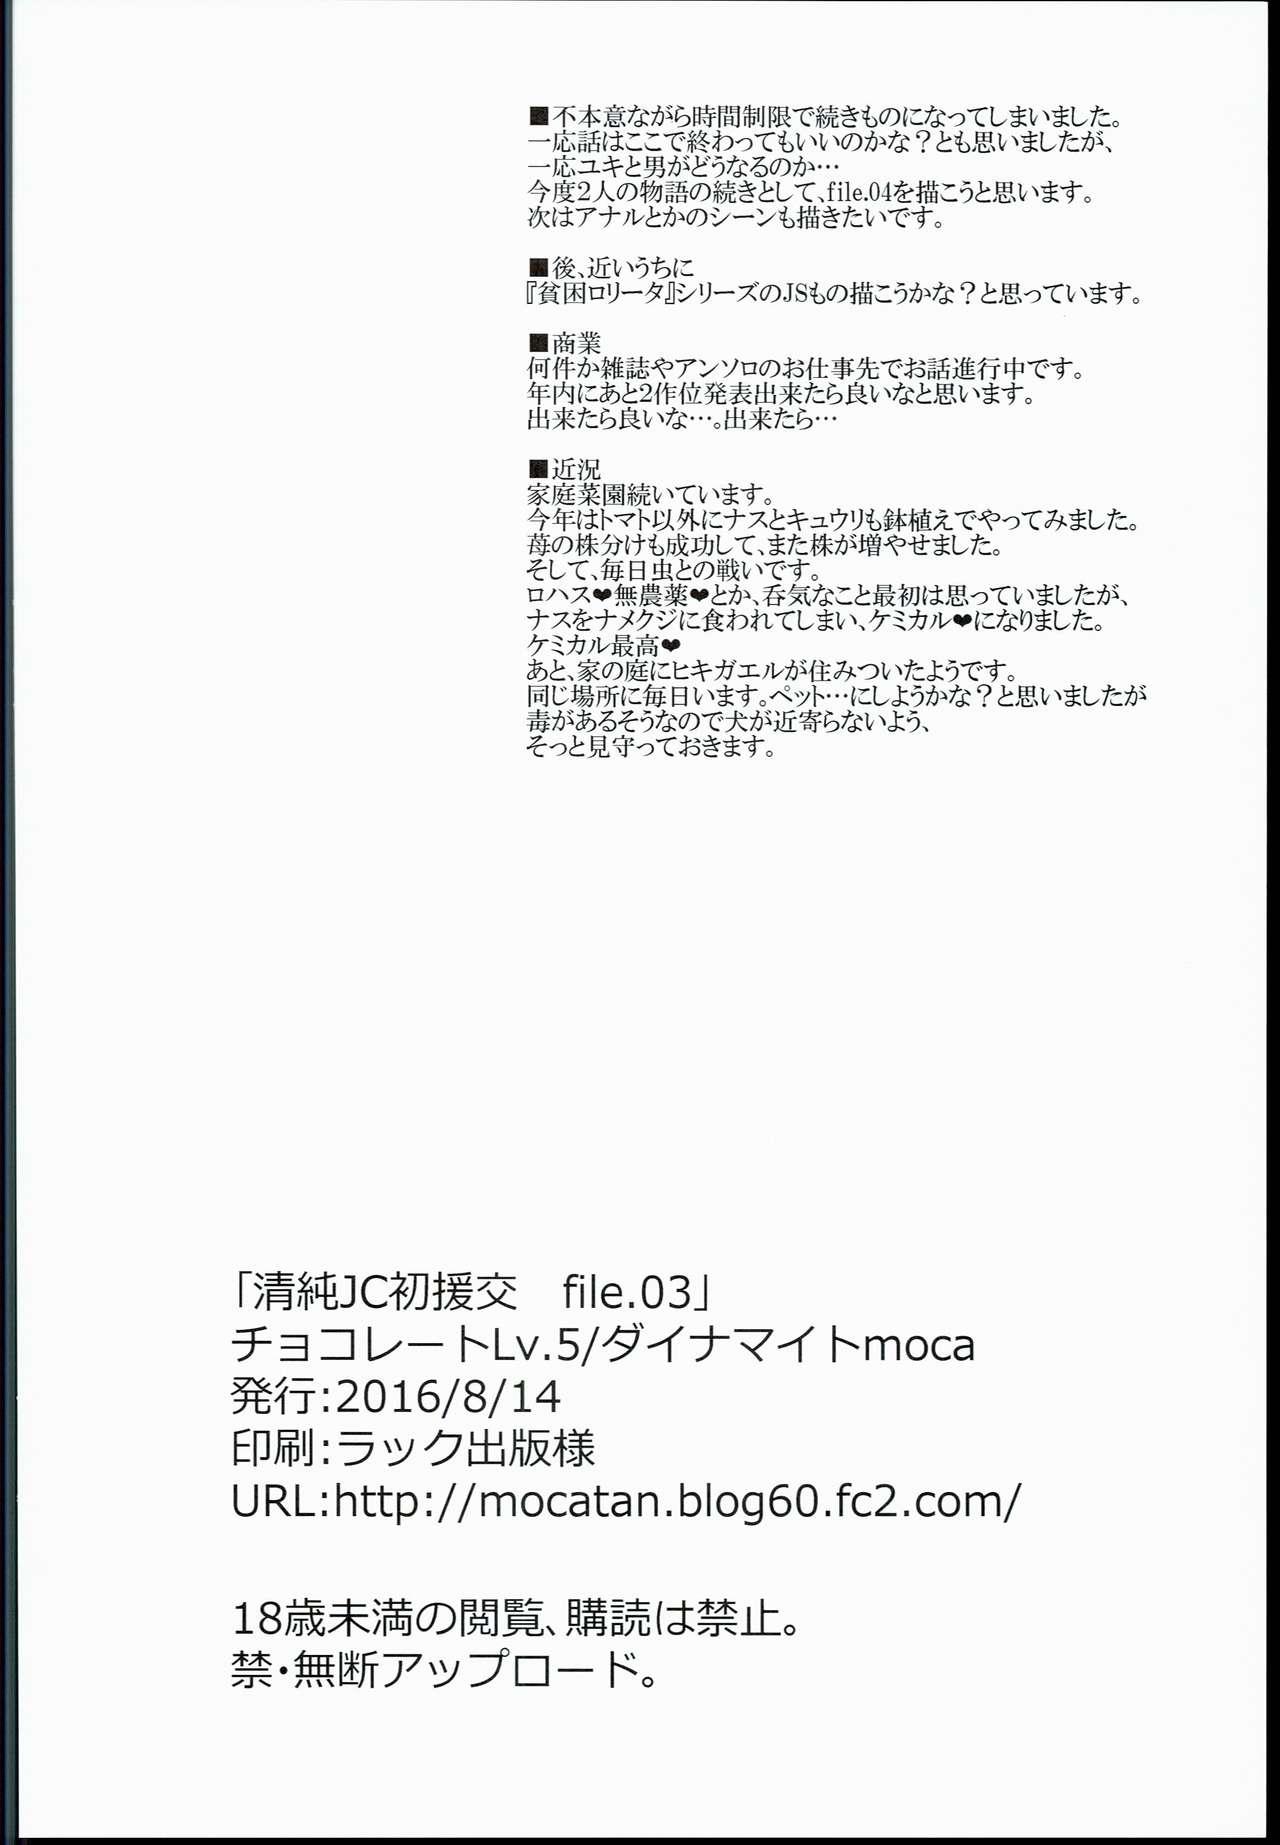 Seijun JC Hatsuenkou file.03 29